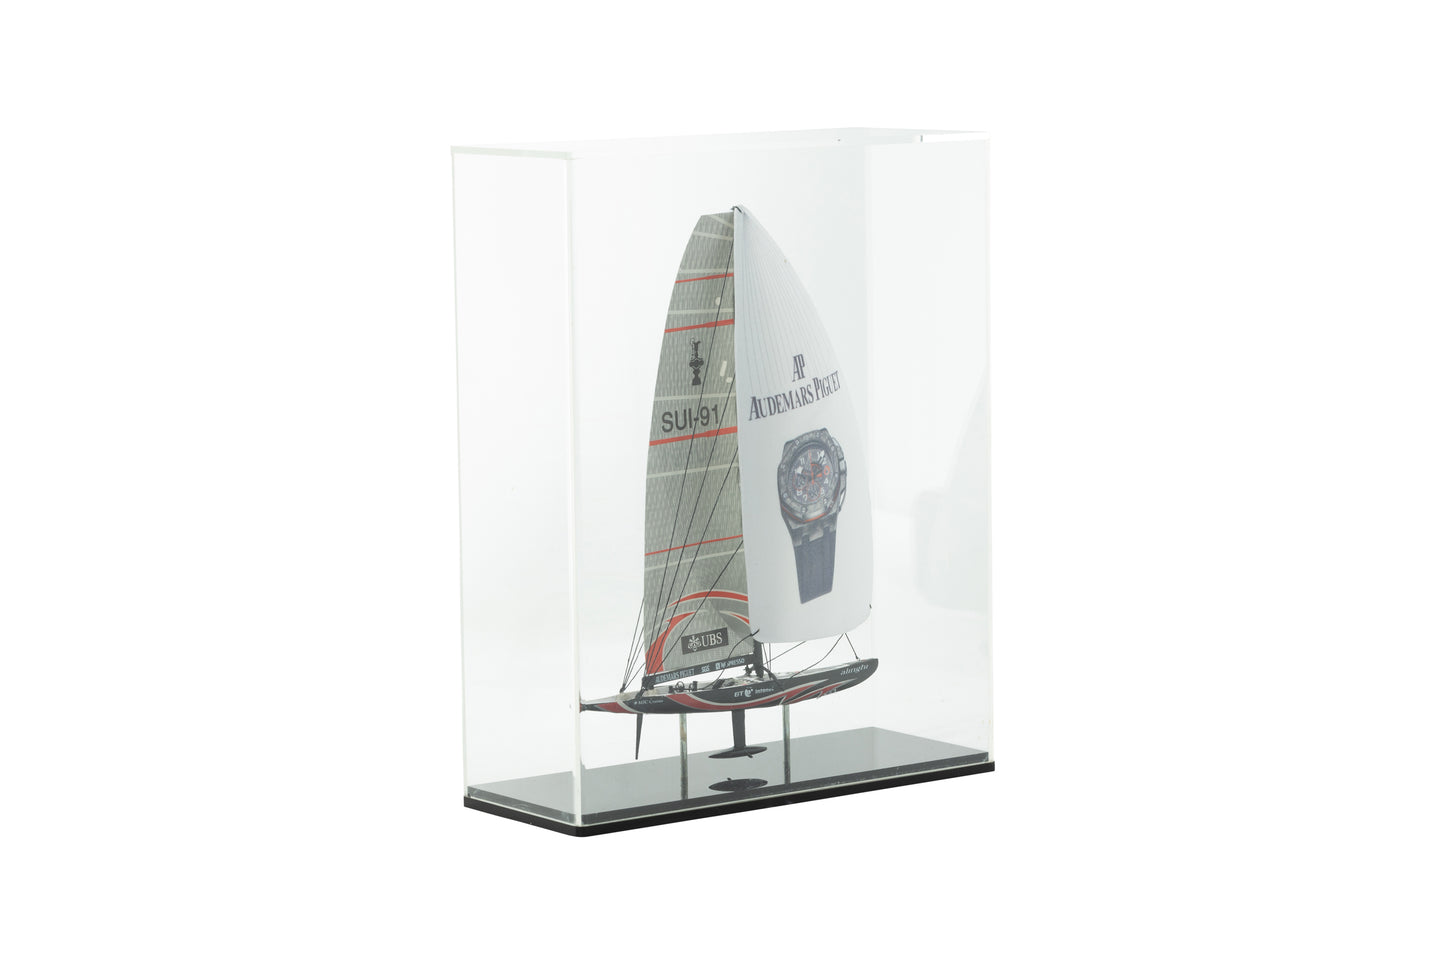 Audemars Piguet Sailing Ship Model